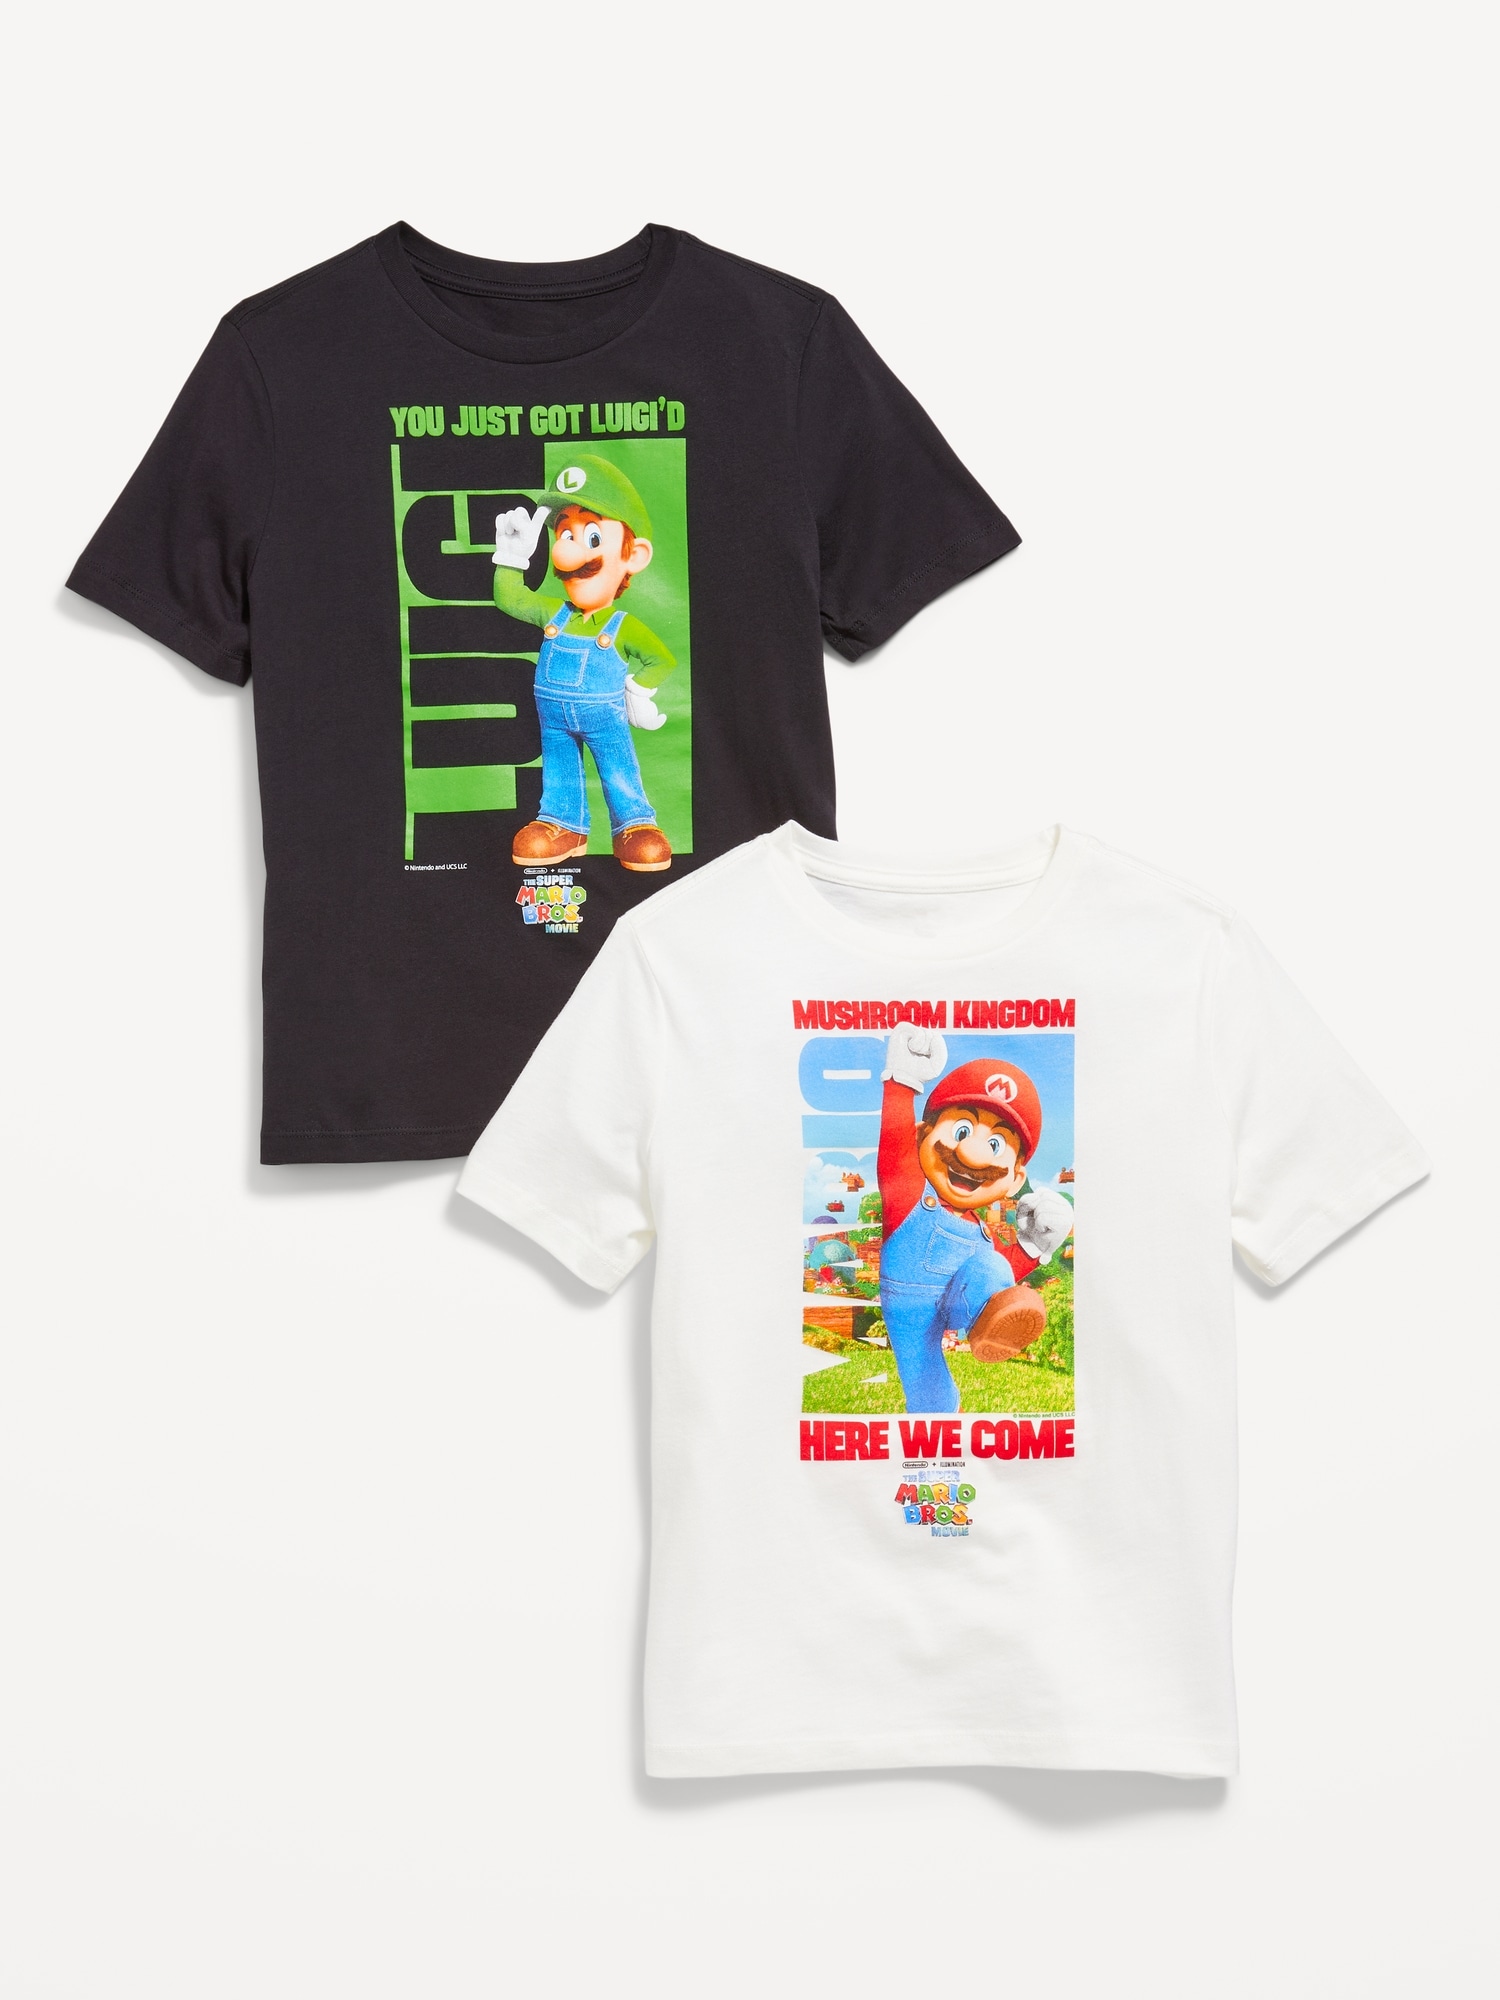 Super Mario™ Gender-Neutral T-Shirt 2-Pack for Kids